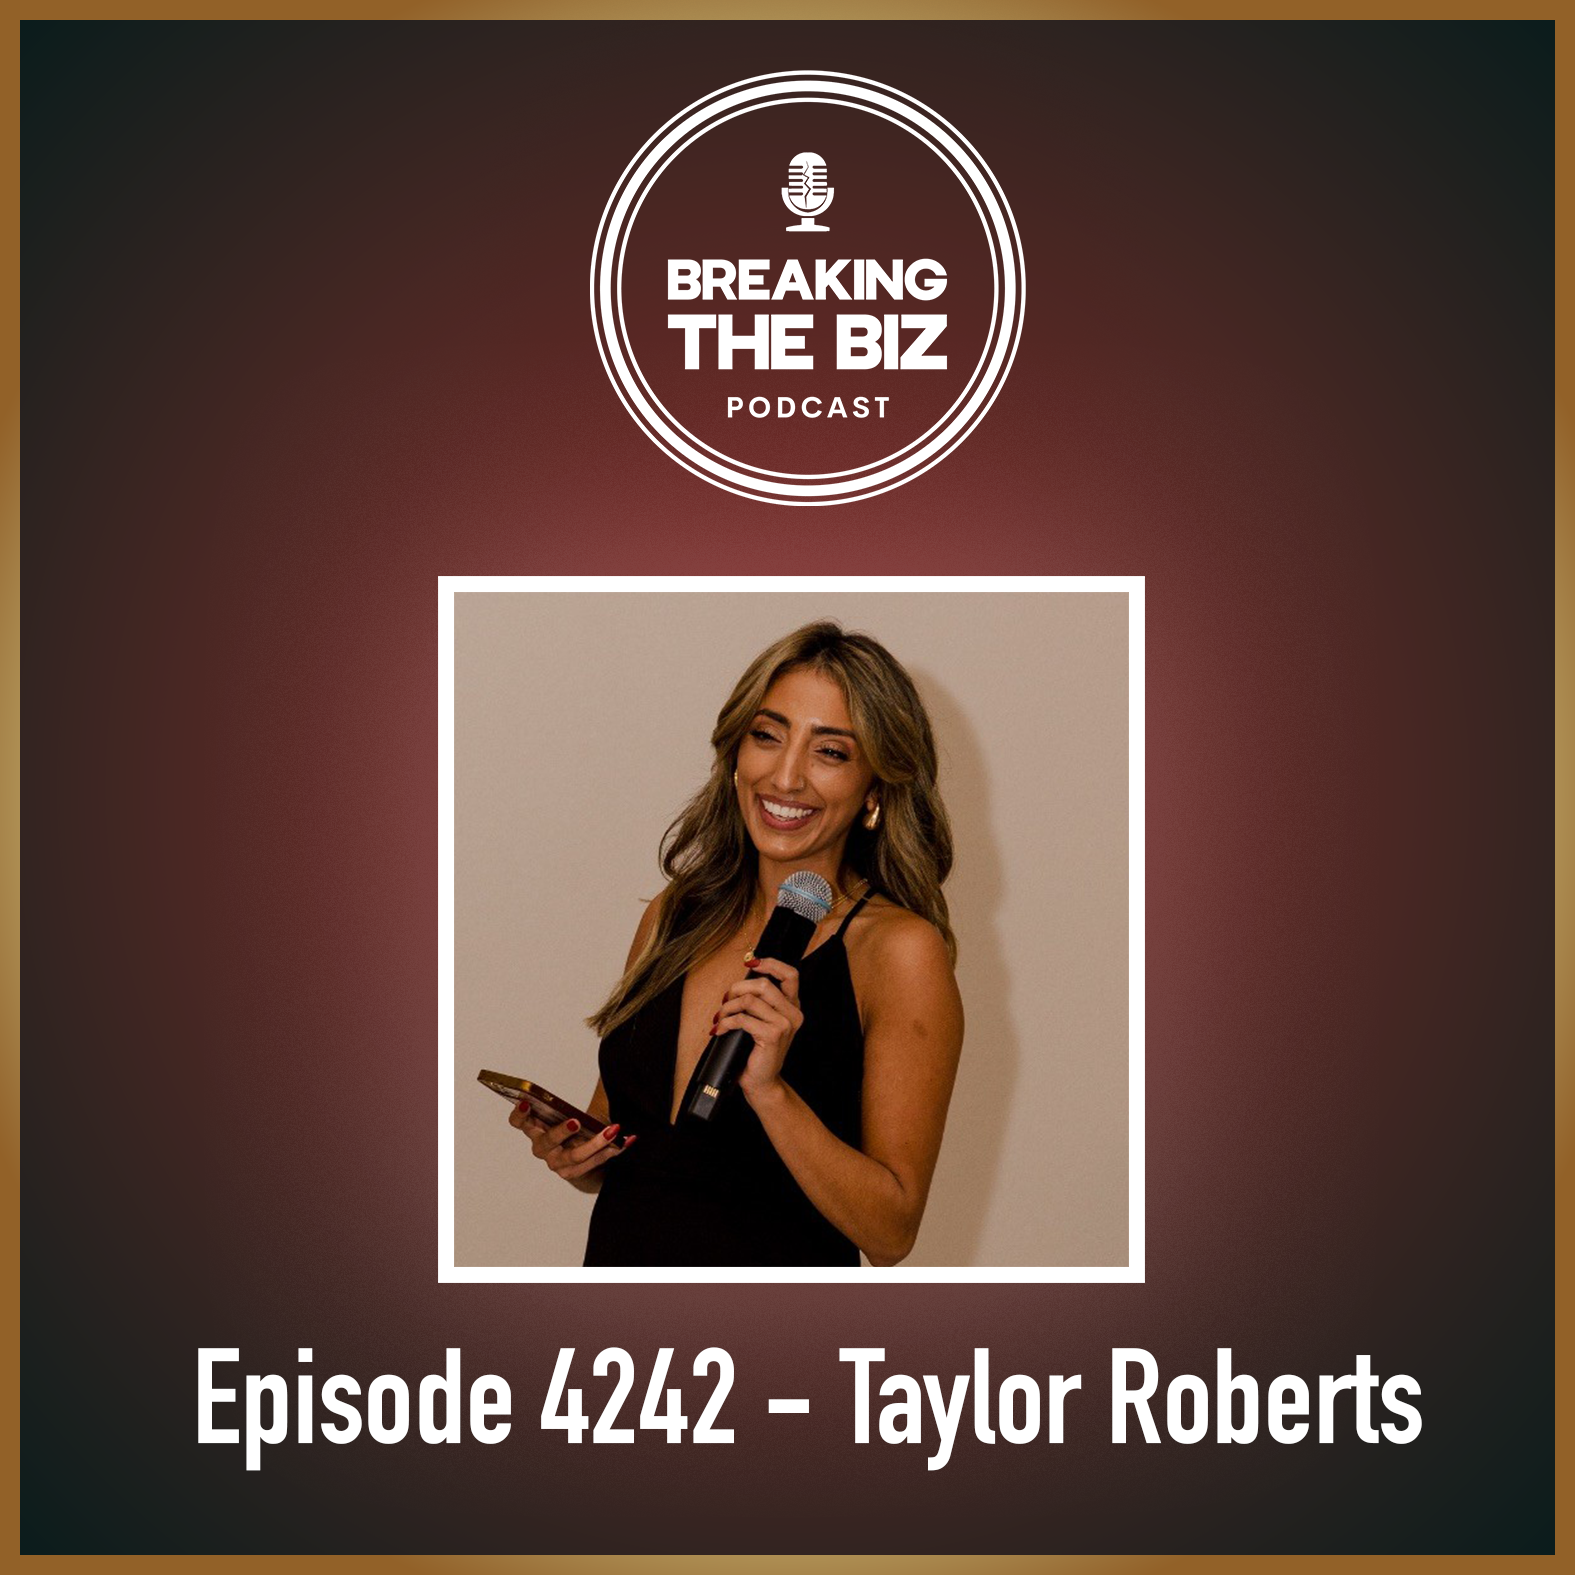 Episode 4242 - Taylor Roberts